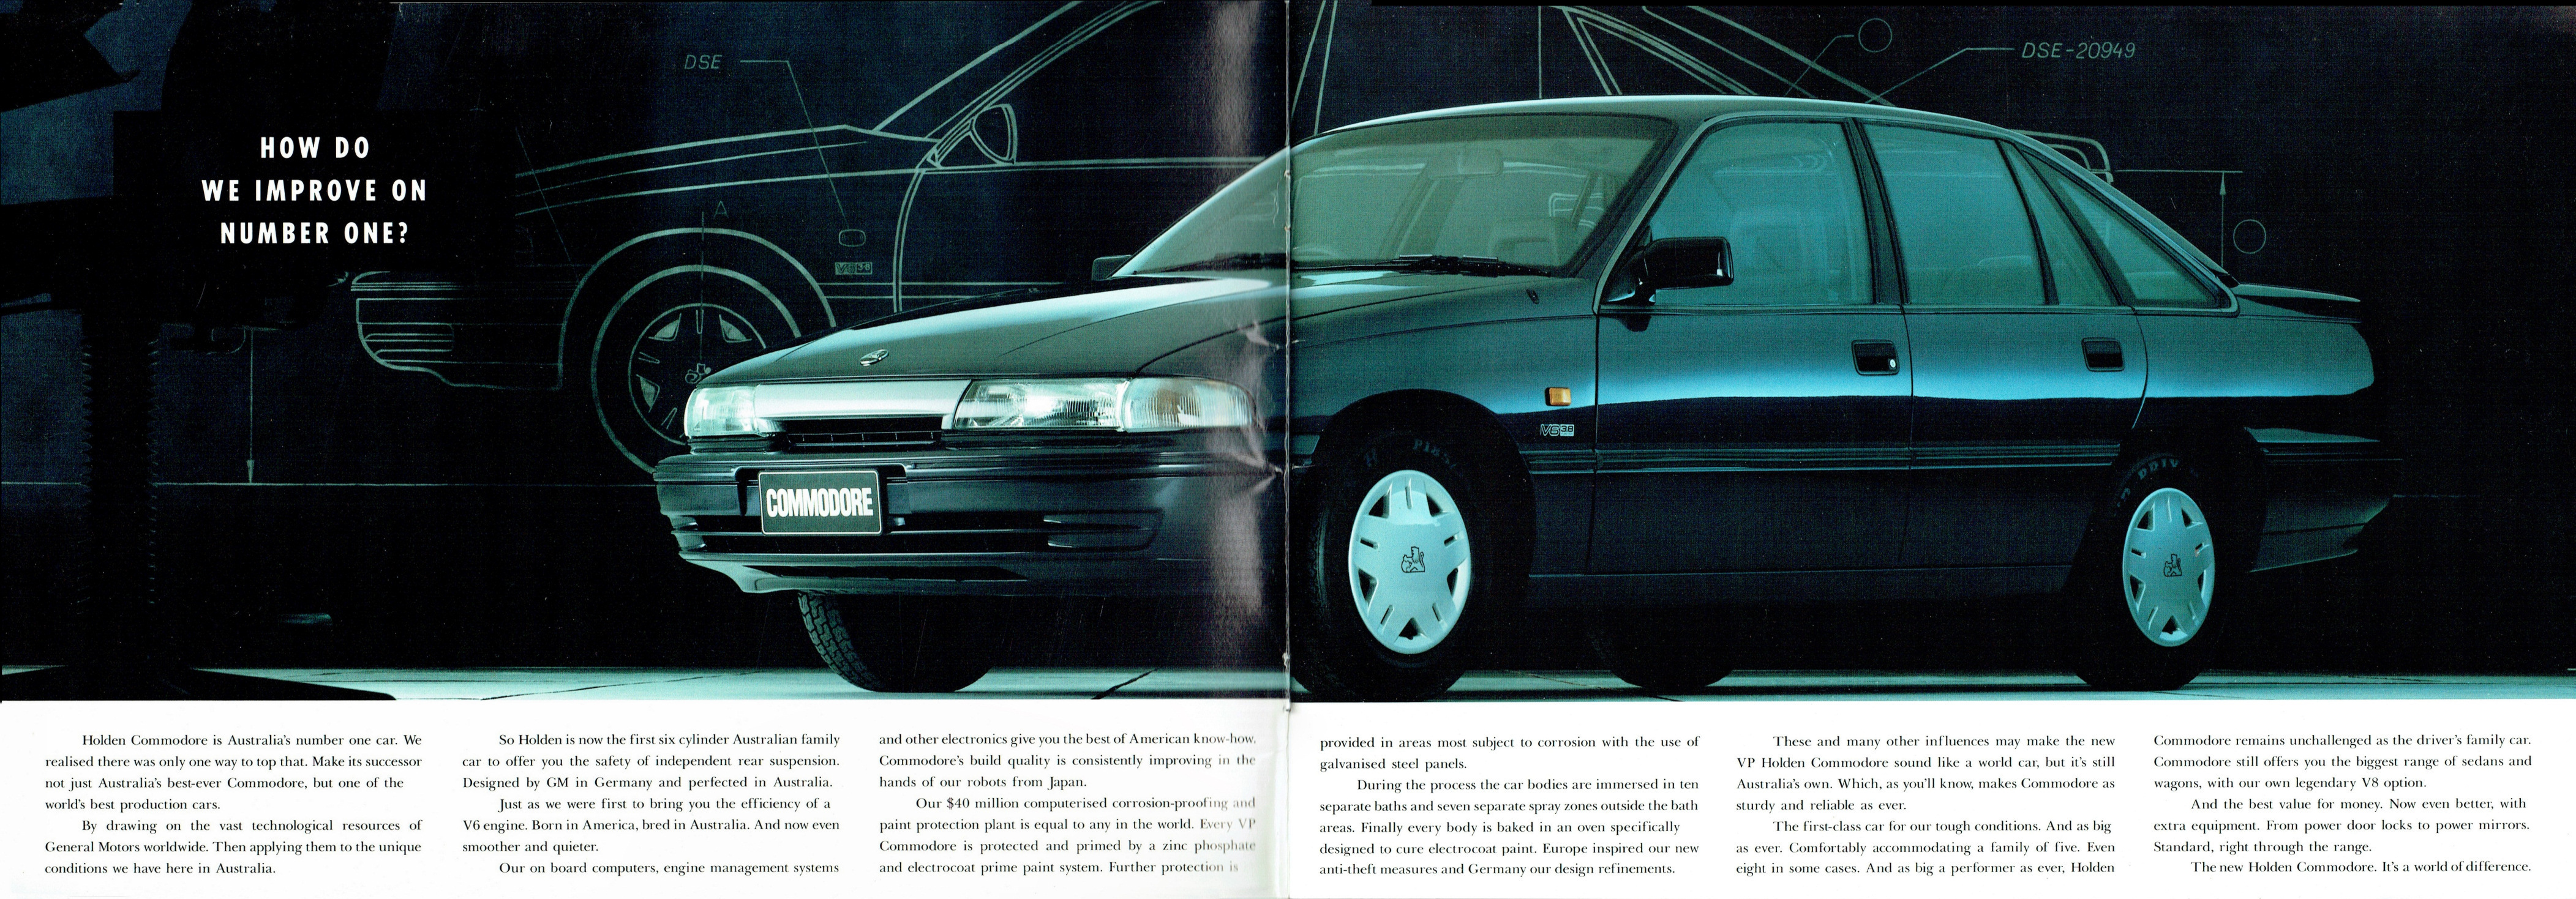 1992_Holden_VP_Commodore-02-03